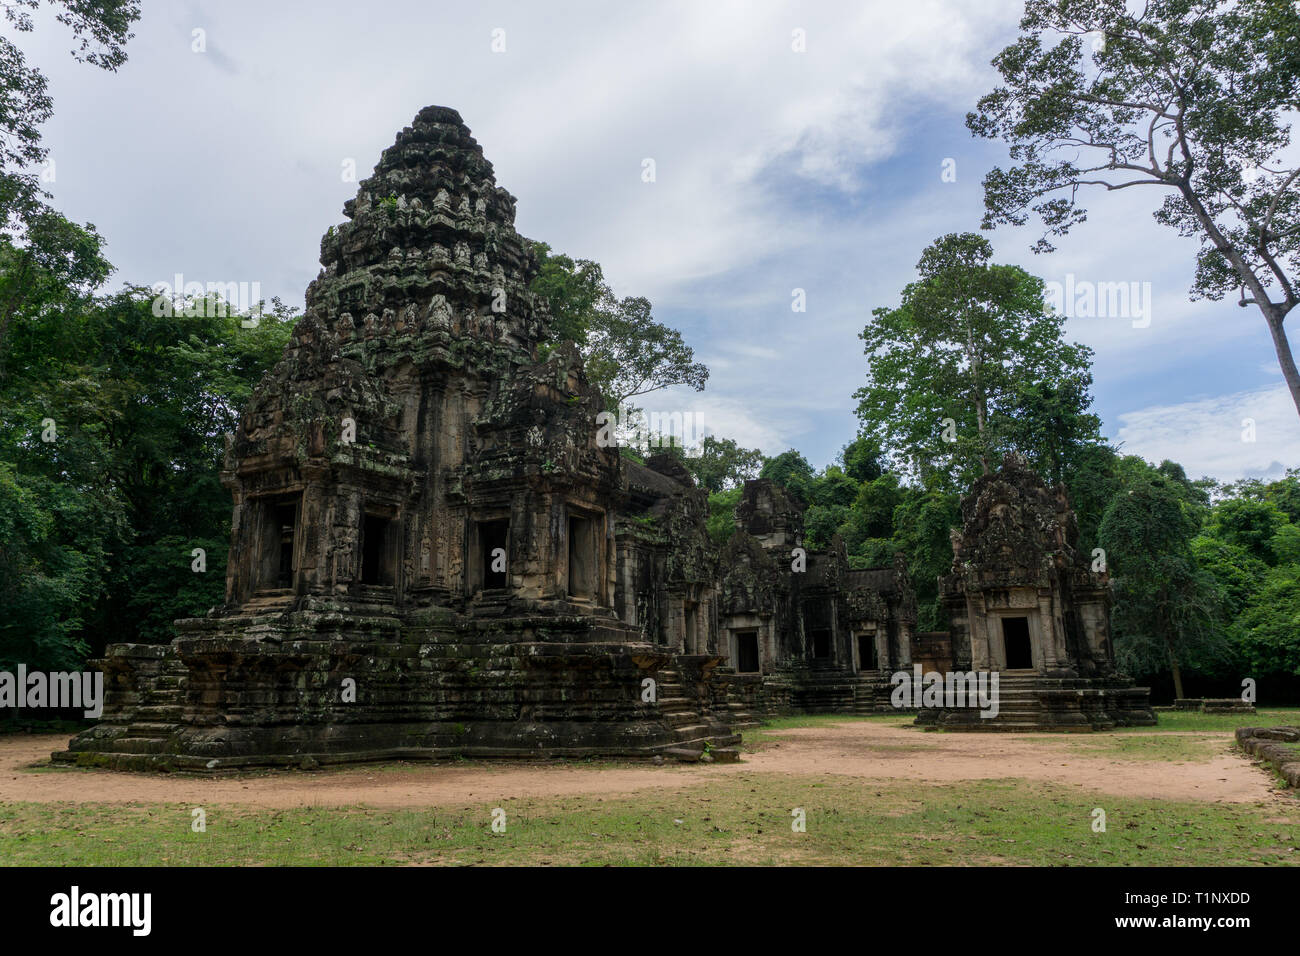 Tempel der Angkor archäologische Stätte in Siem Reap, Kambodscha Stockfoto